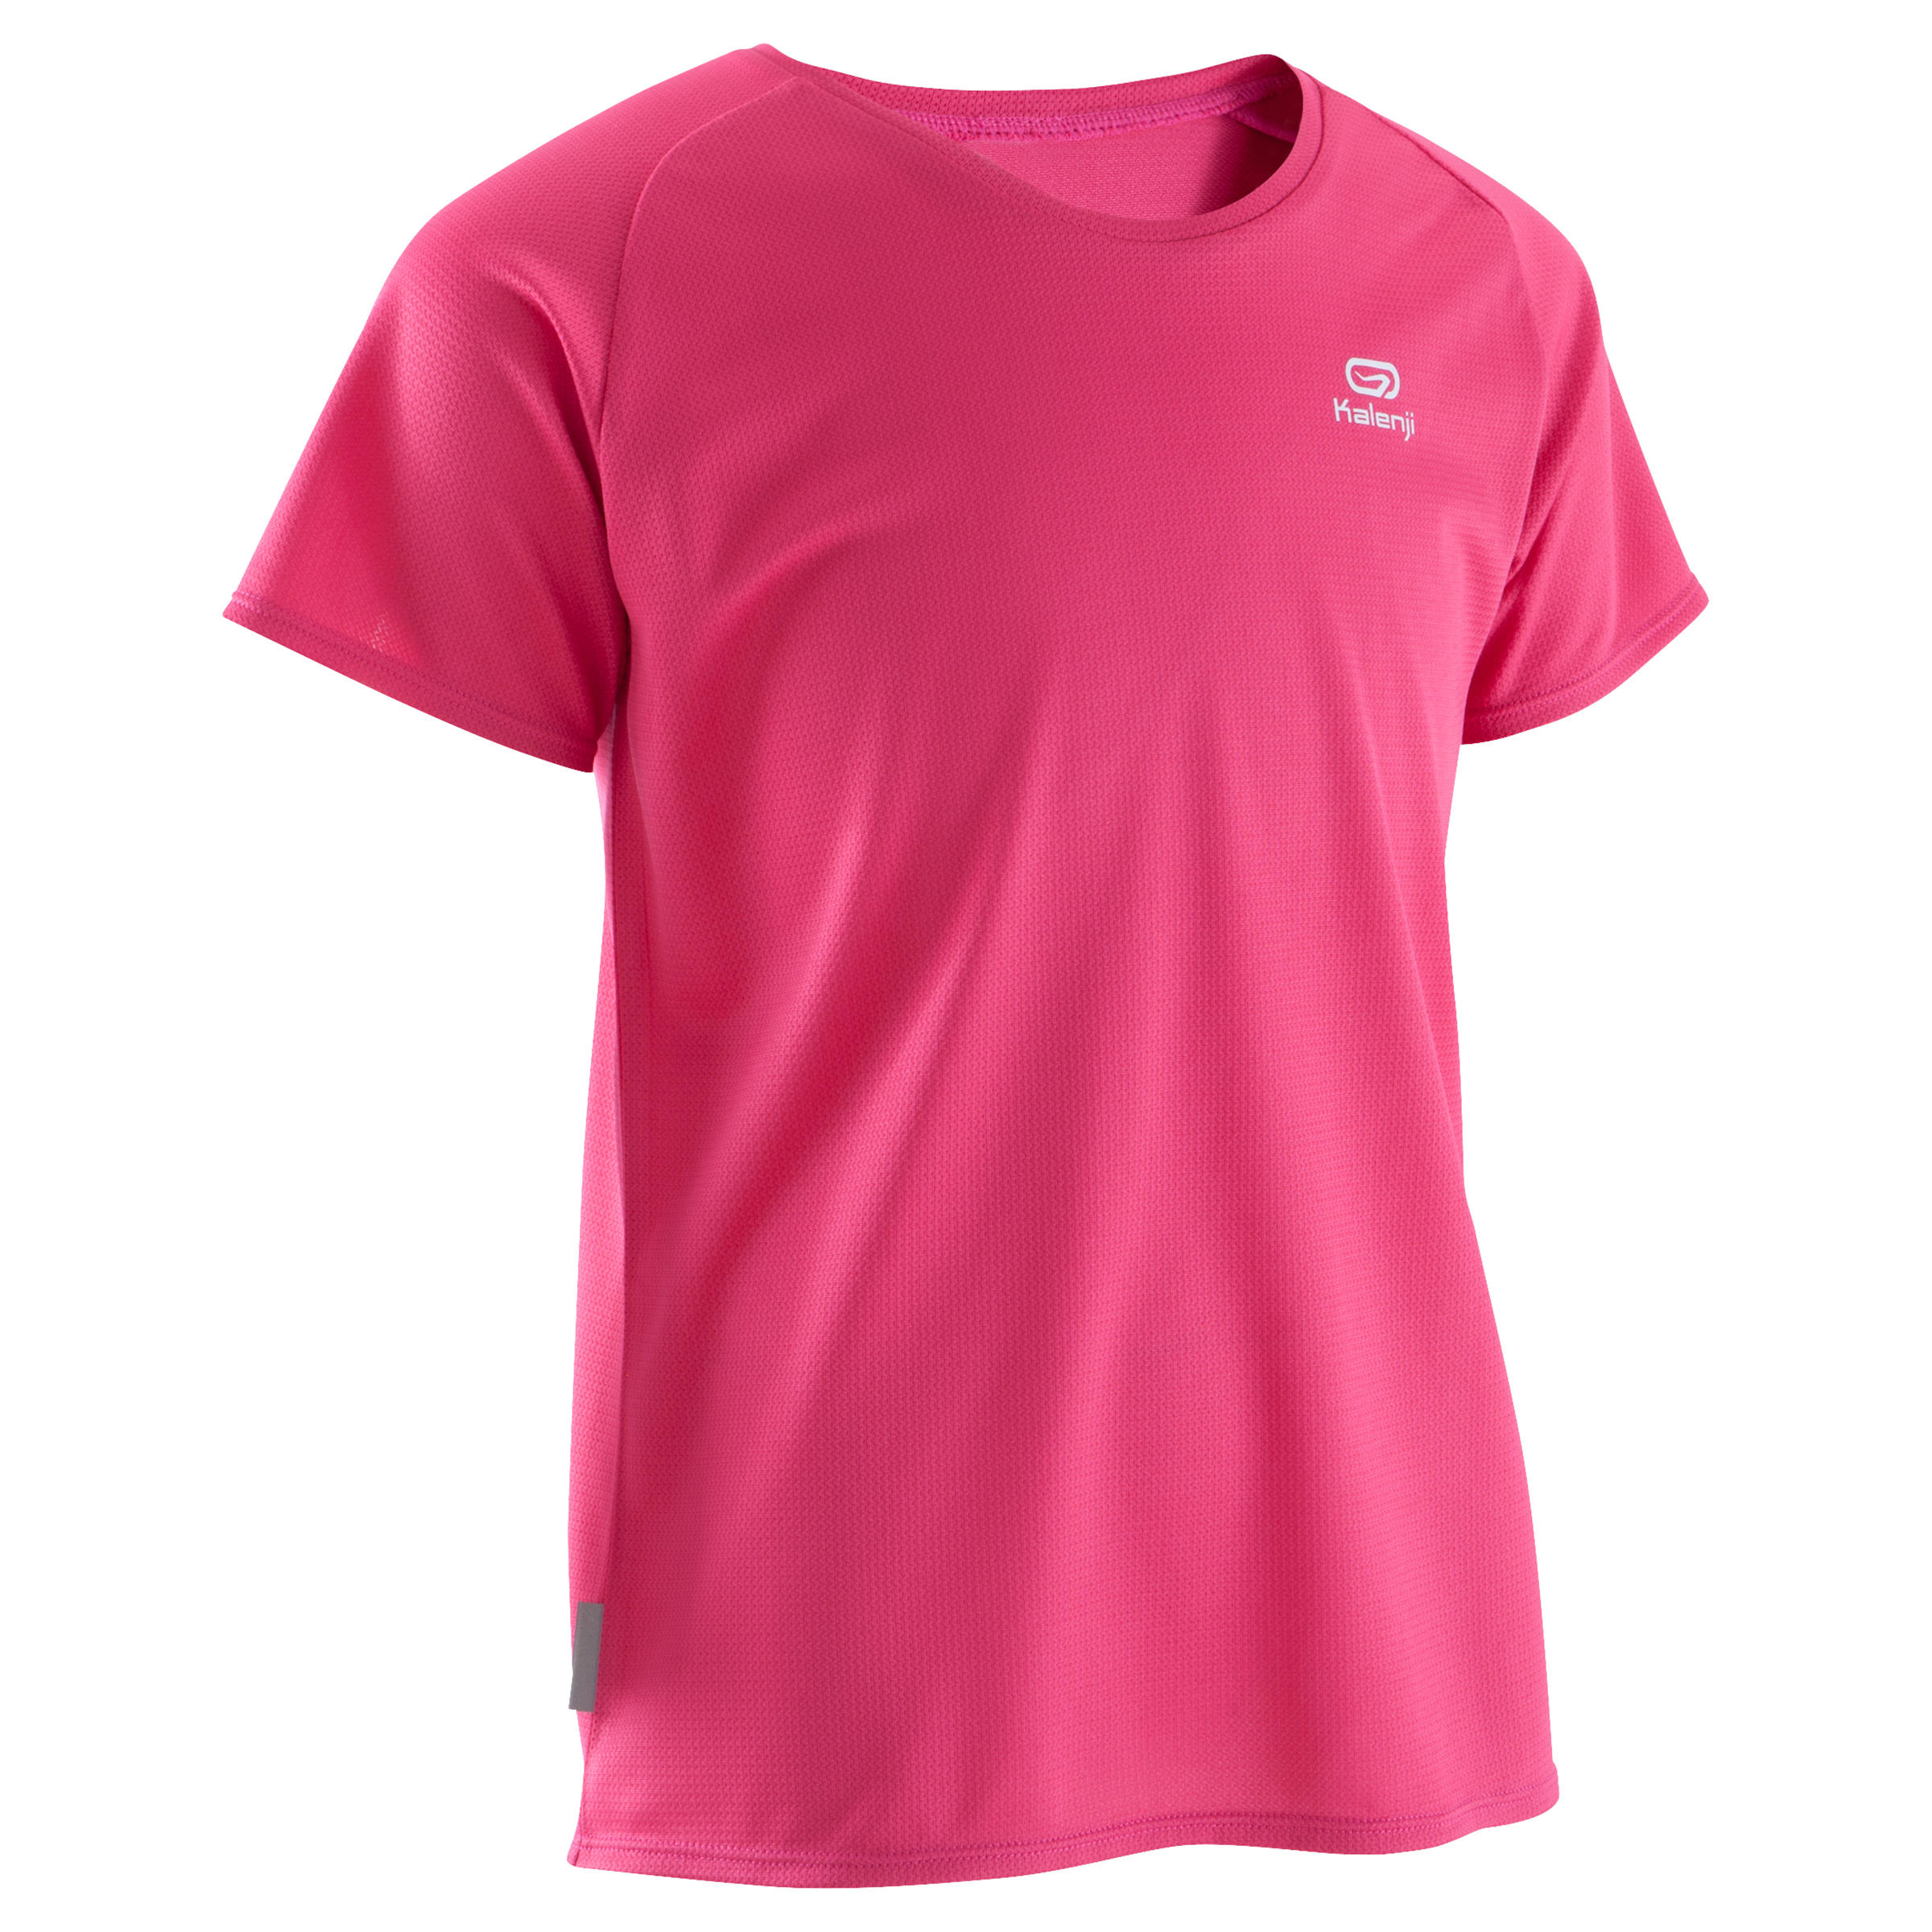 KALENJI Run Dry Children's T-Shirt - Pink